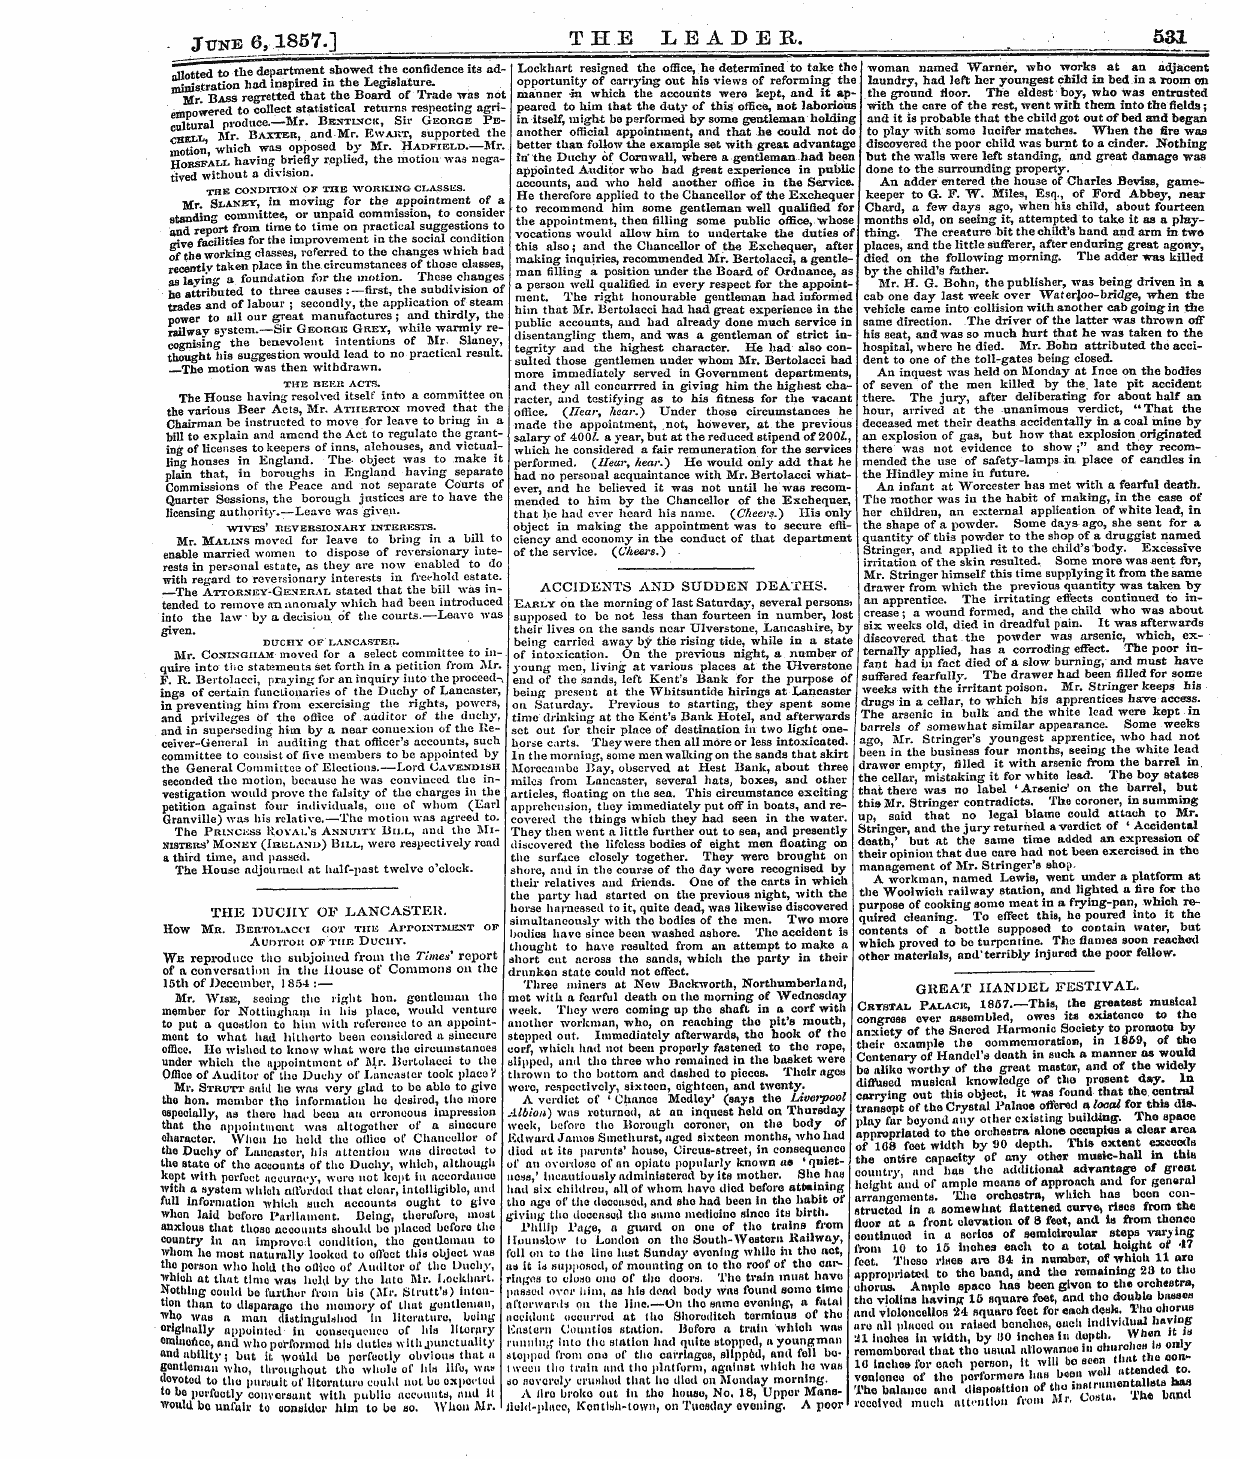 Leader (1850-1860): jS F Y, 2nd edition - June 6,1857.1 The Leader. . 531